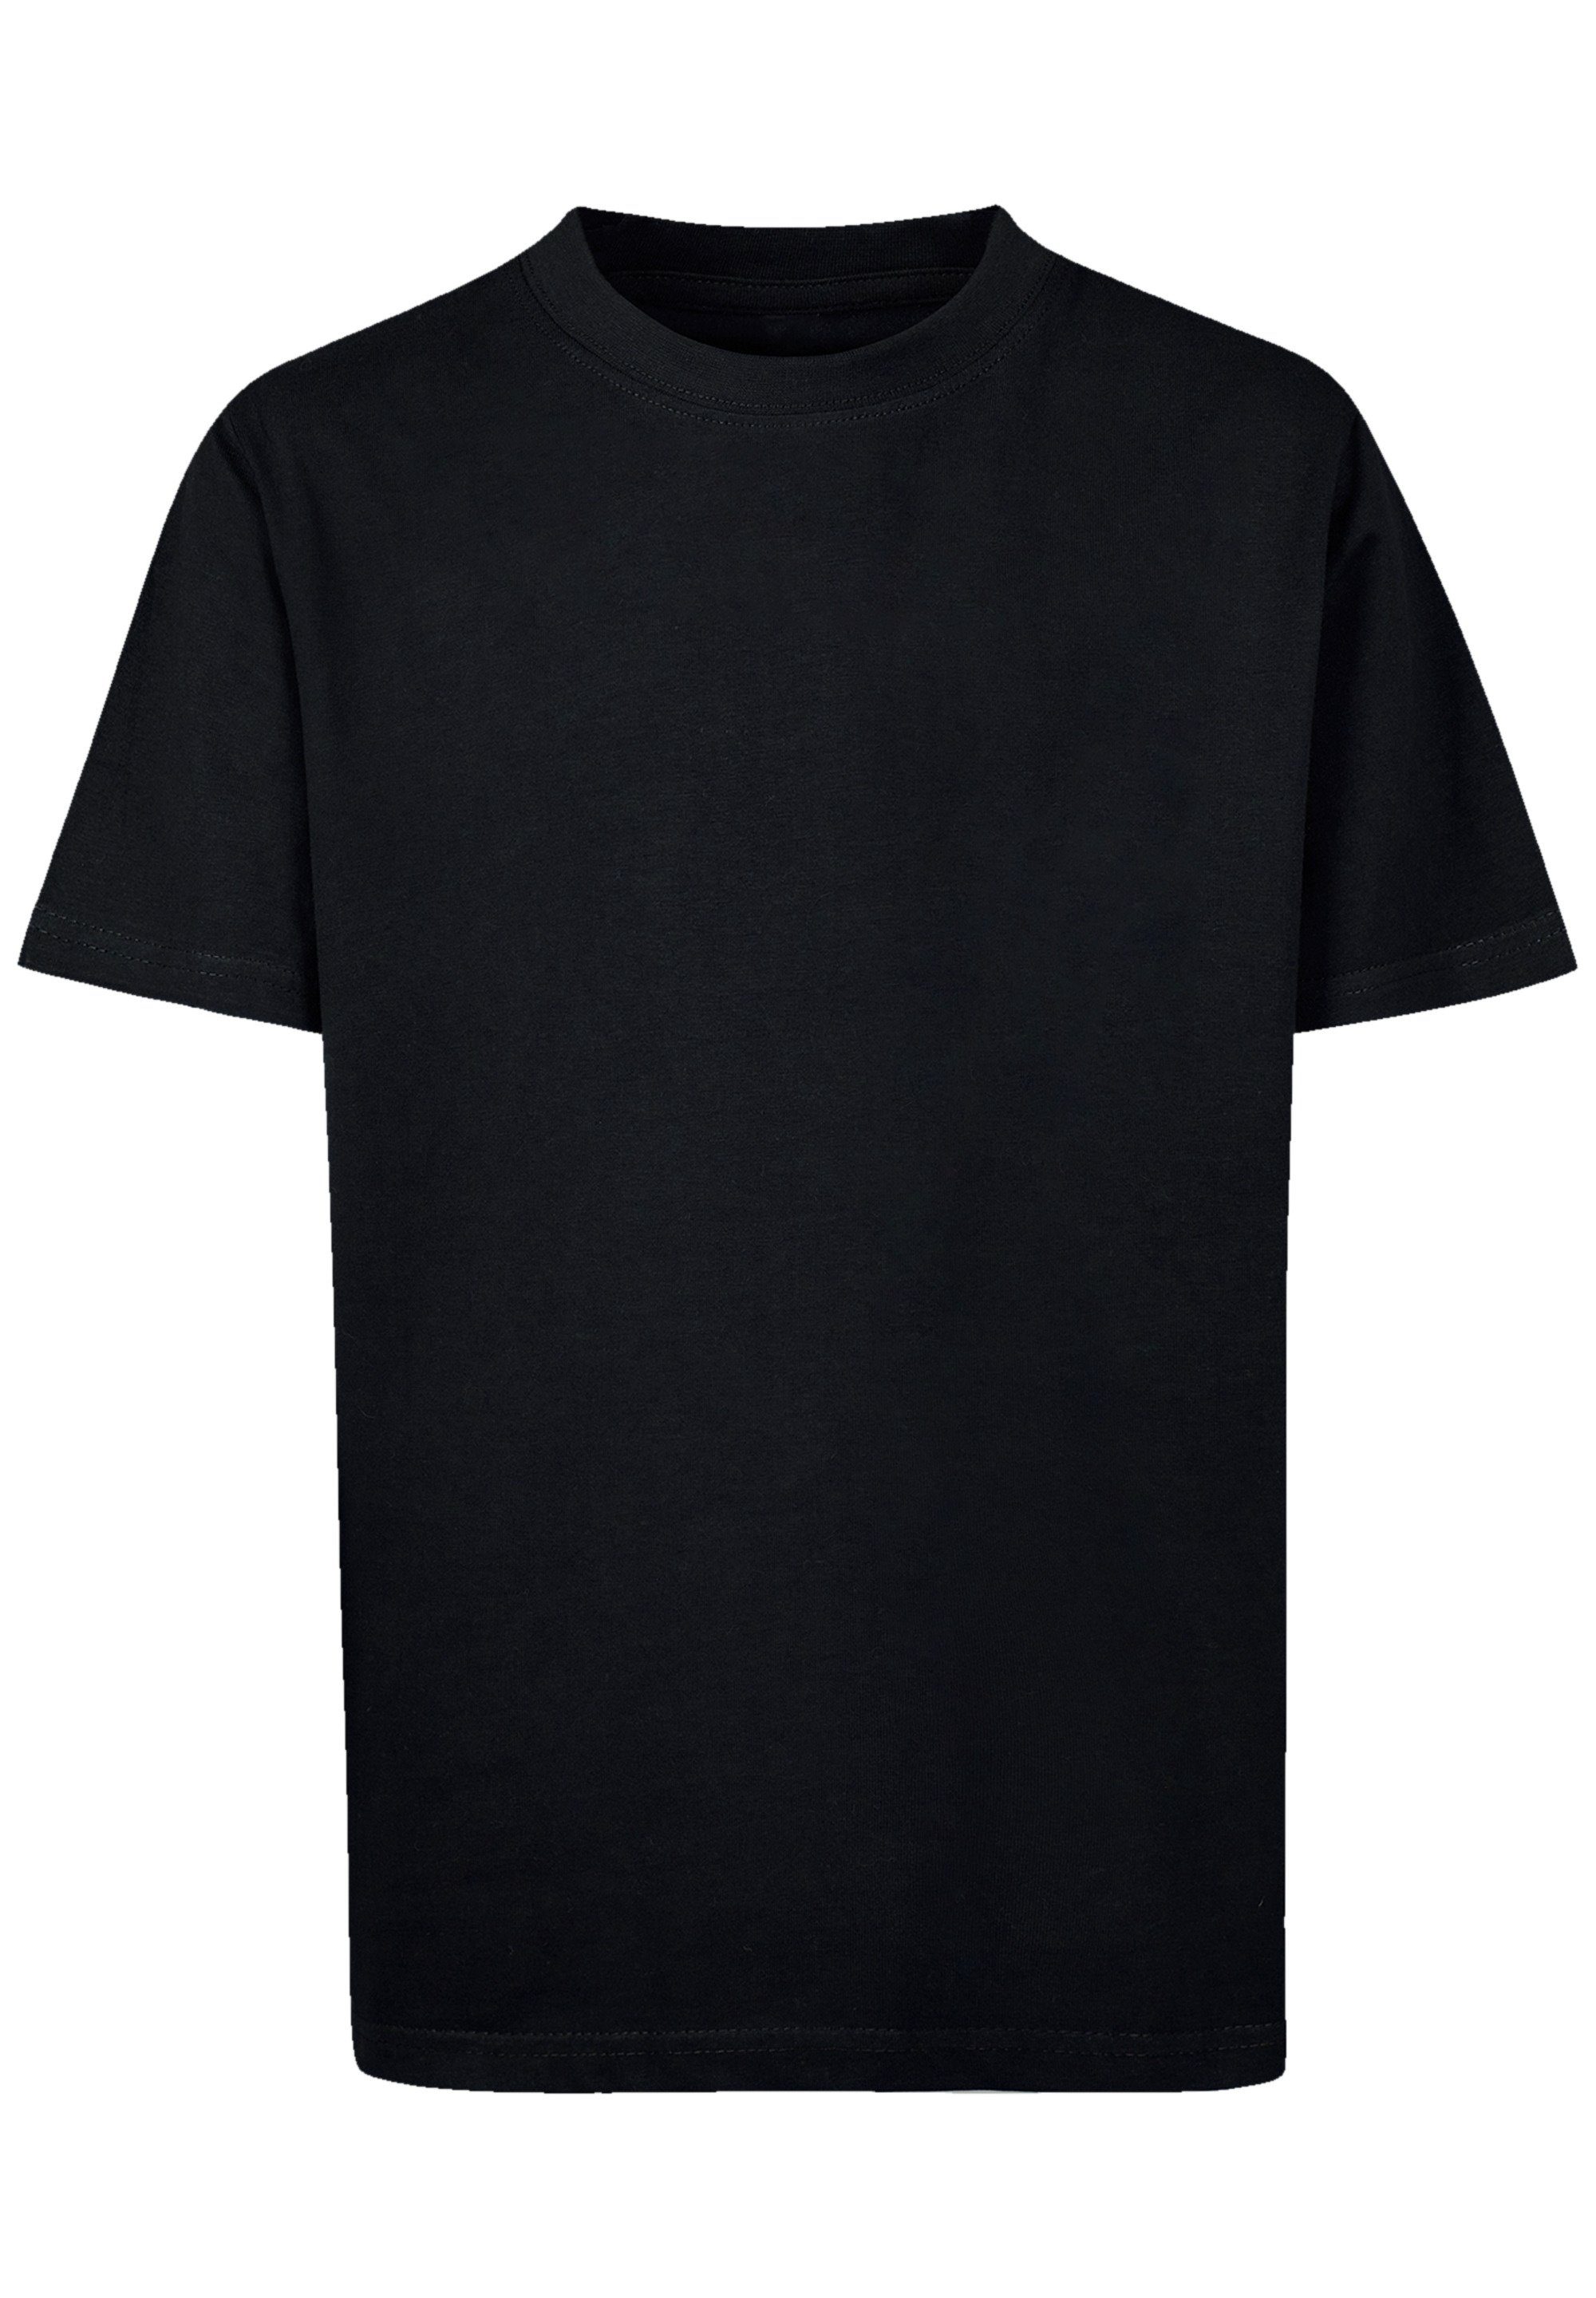 F4NT4STIC T-Shirt 145/152 Print, groß trägt Model cm 145 ist und Größe Aloha Das